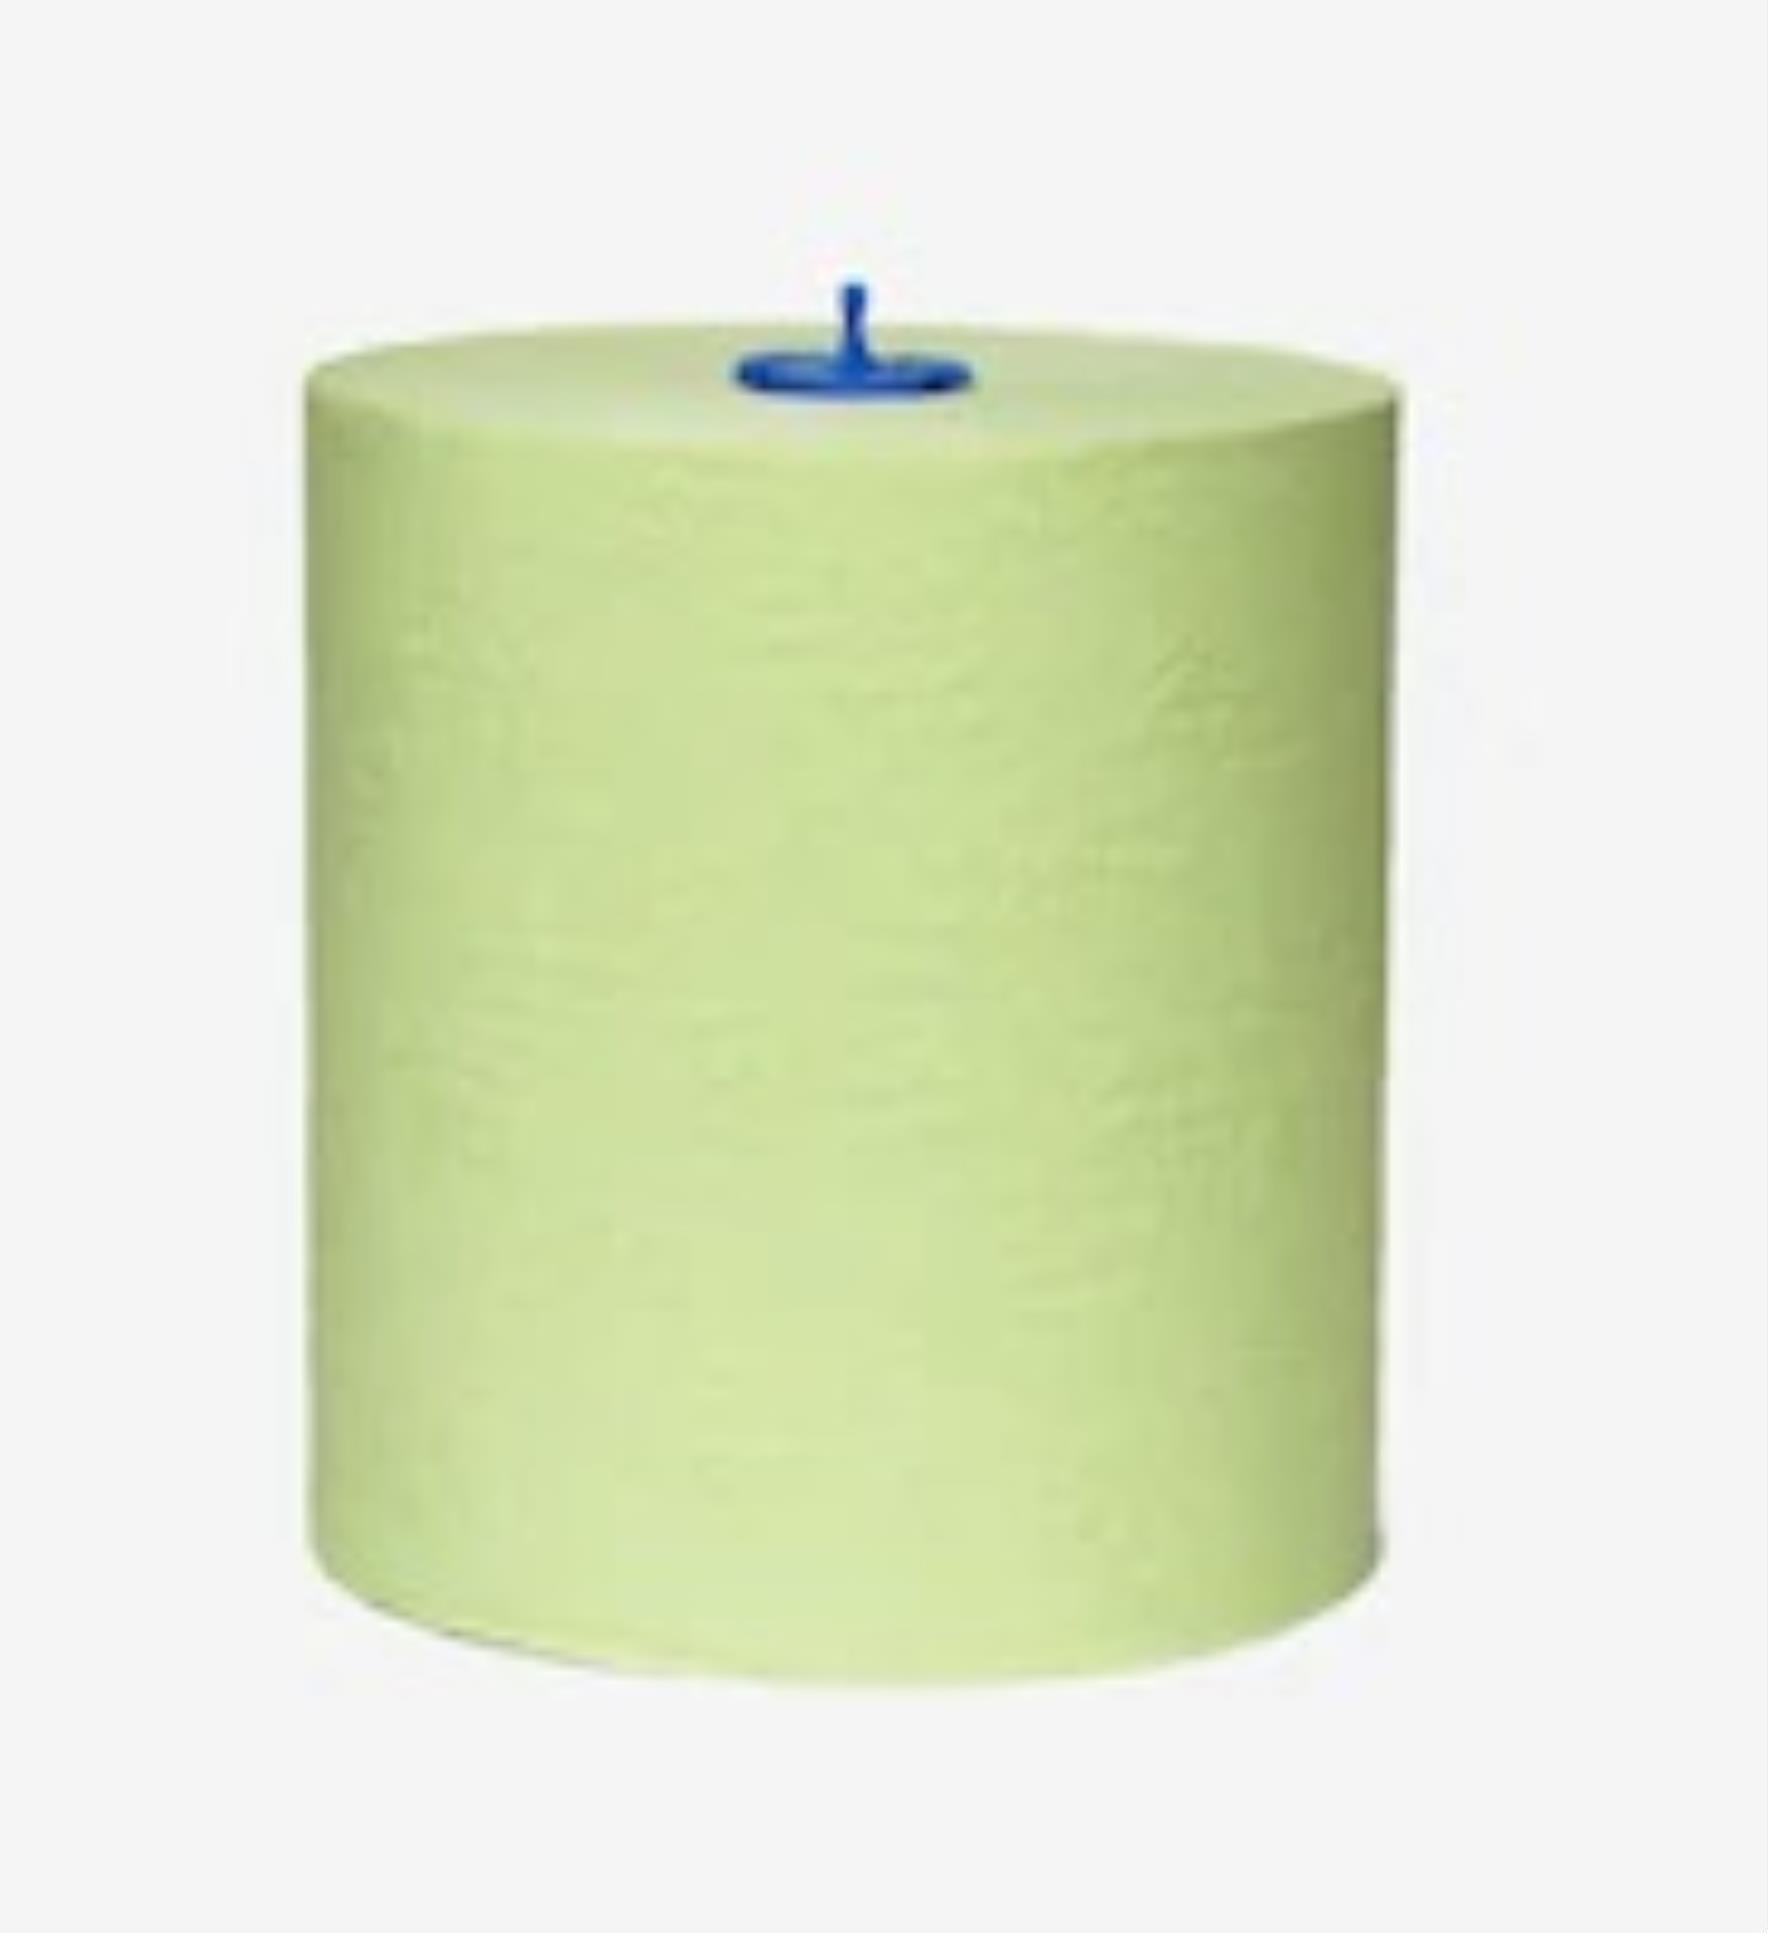 Papírové ručníky Tork - dvouvrstvé, 21 x 19 cm (š x v), zelené, 6 ks